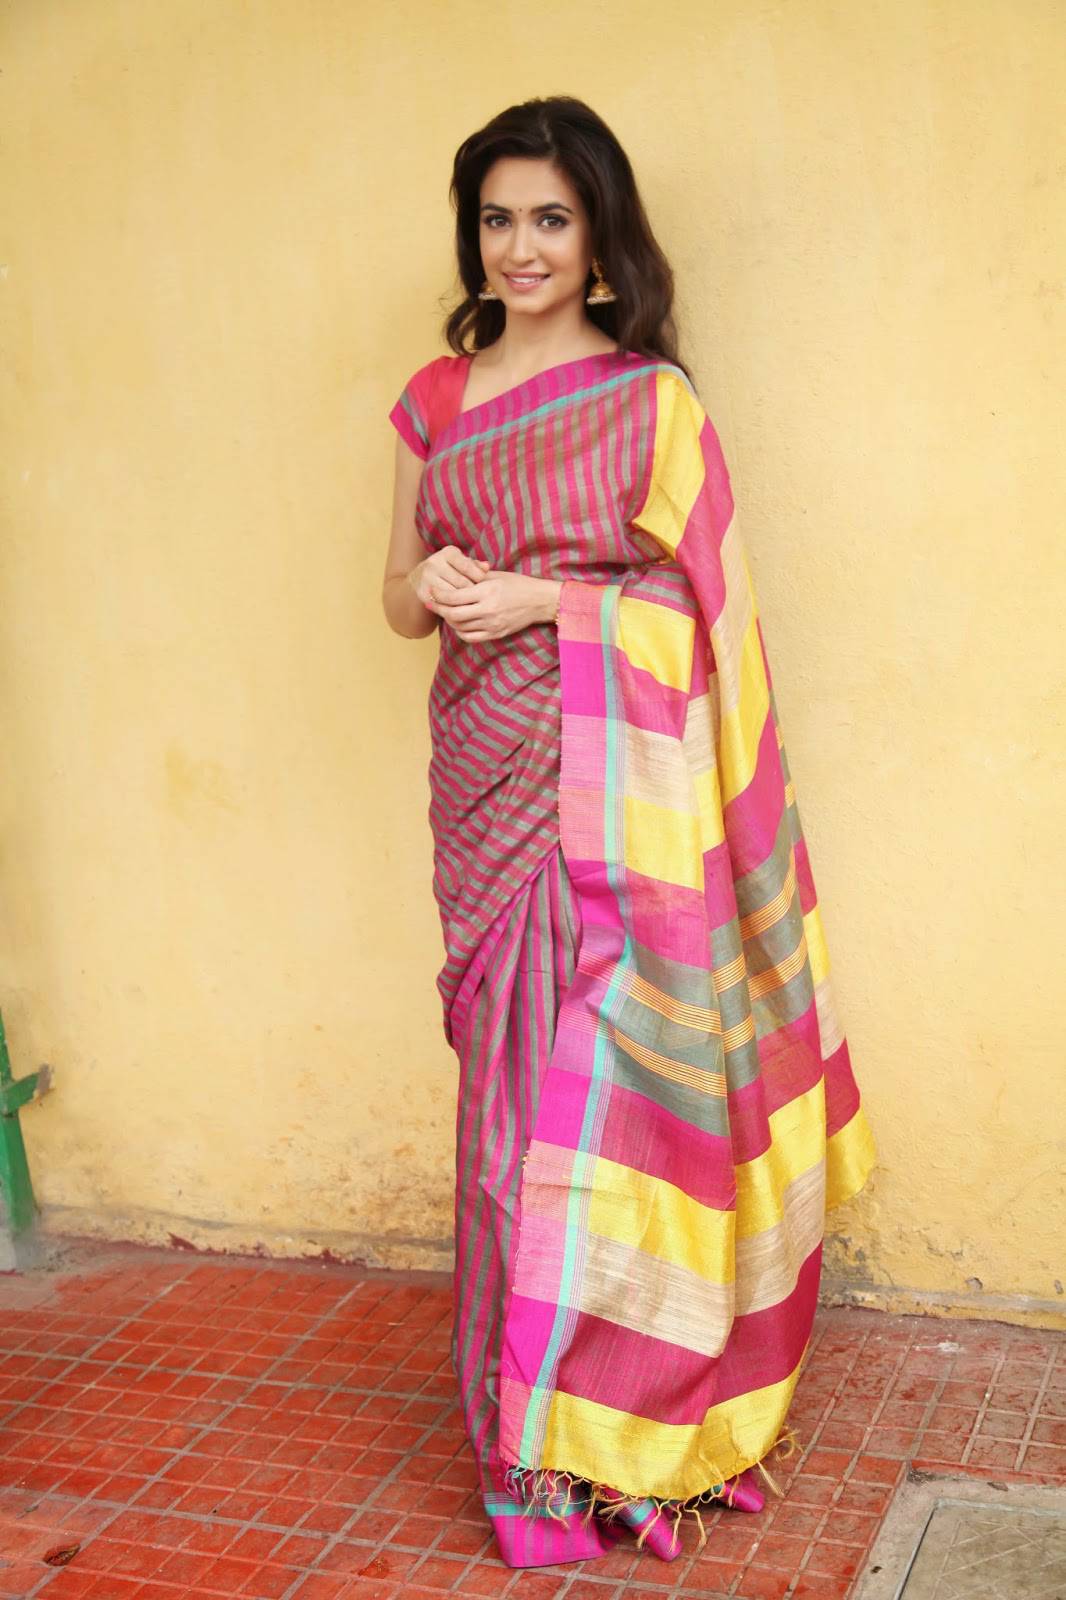 Telugu Actress Kriti Kharbanda Stills in Indian Saree - More Indian ...